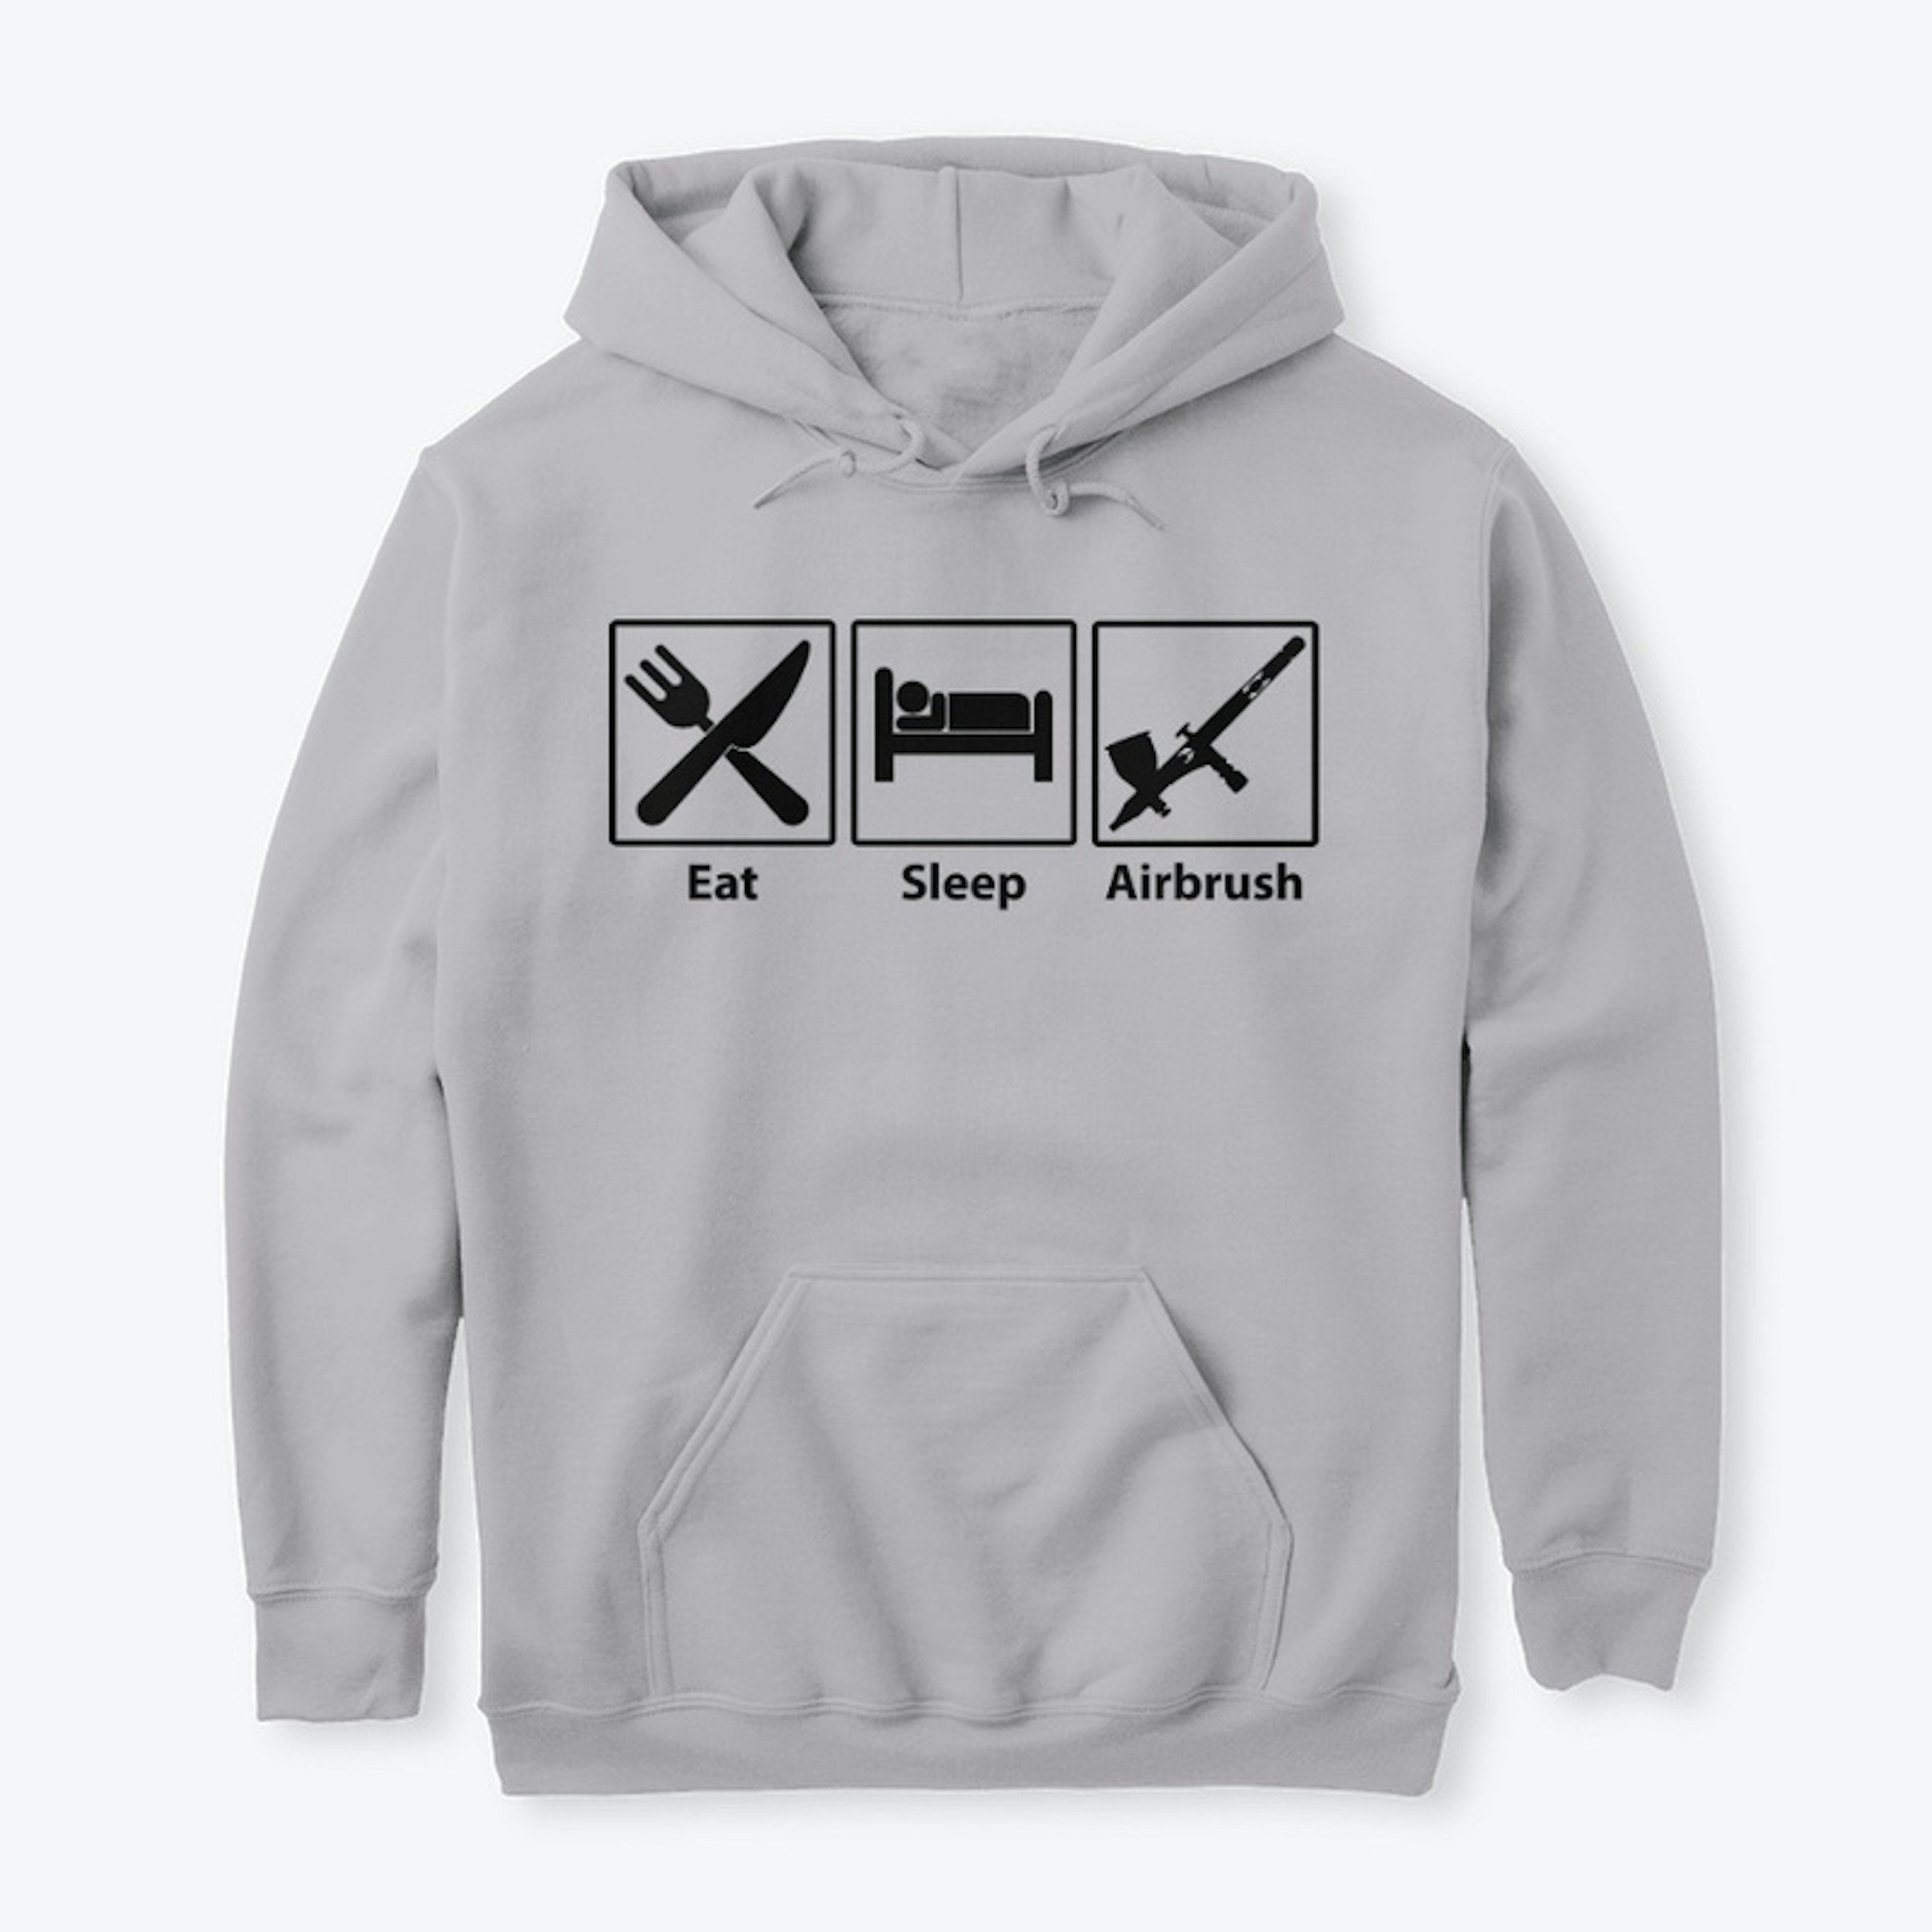 Eat Sleep Airbrush - Black Icons